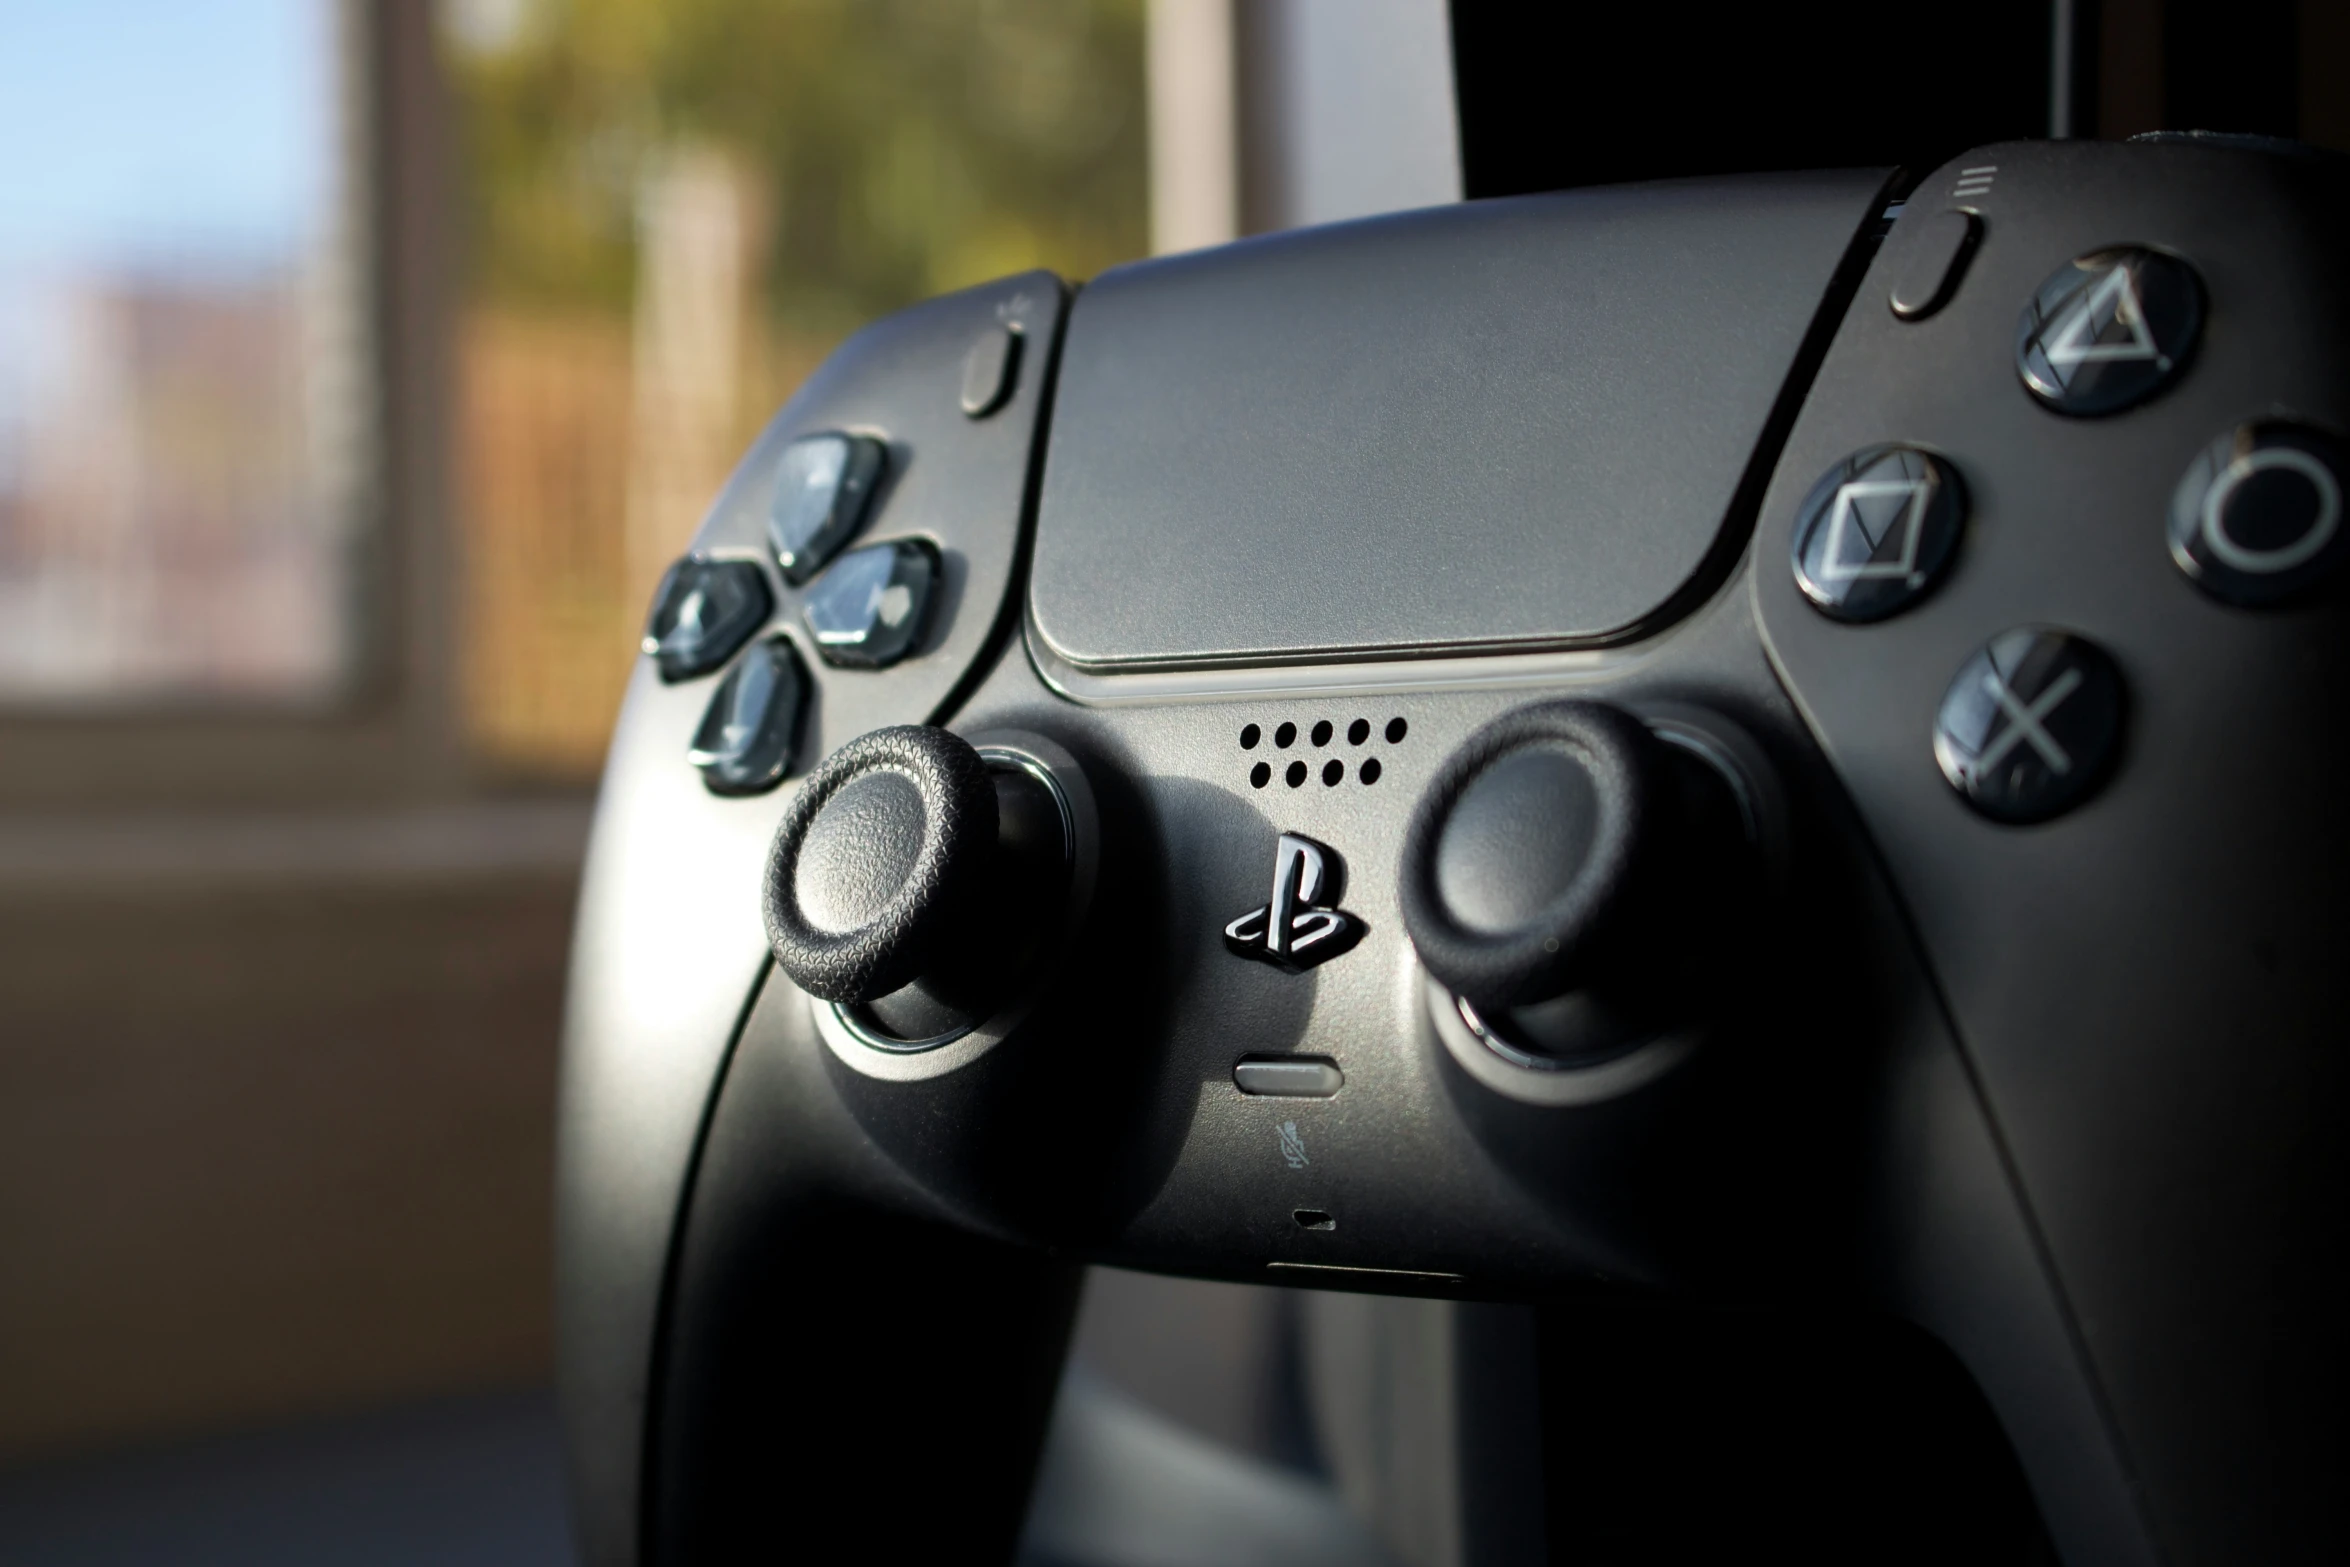 a closeup view of a game controller